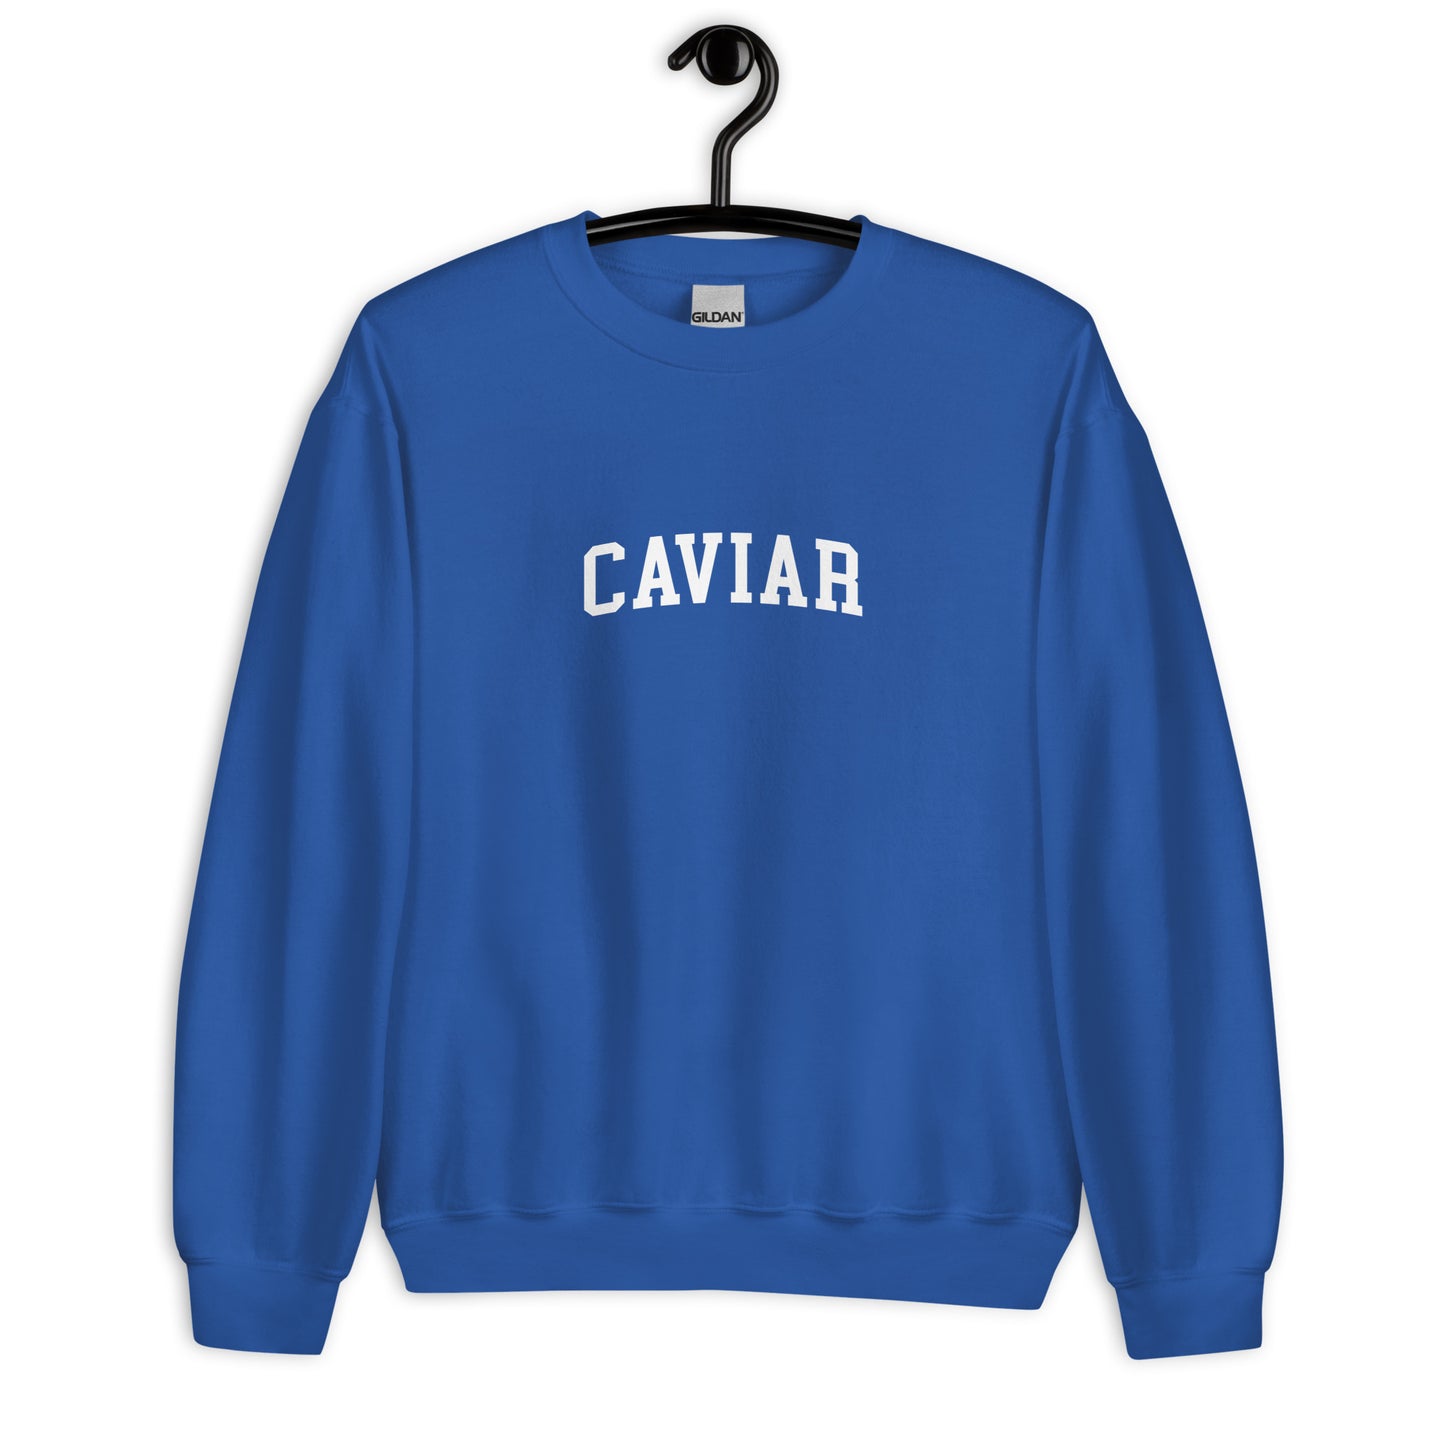 Caviar Sweatshirt - Arched Font